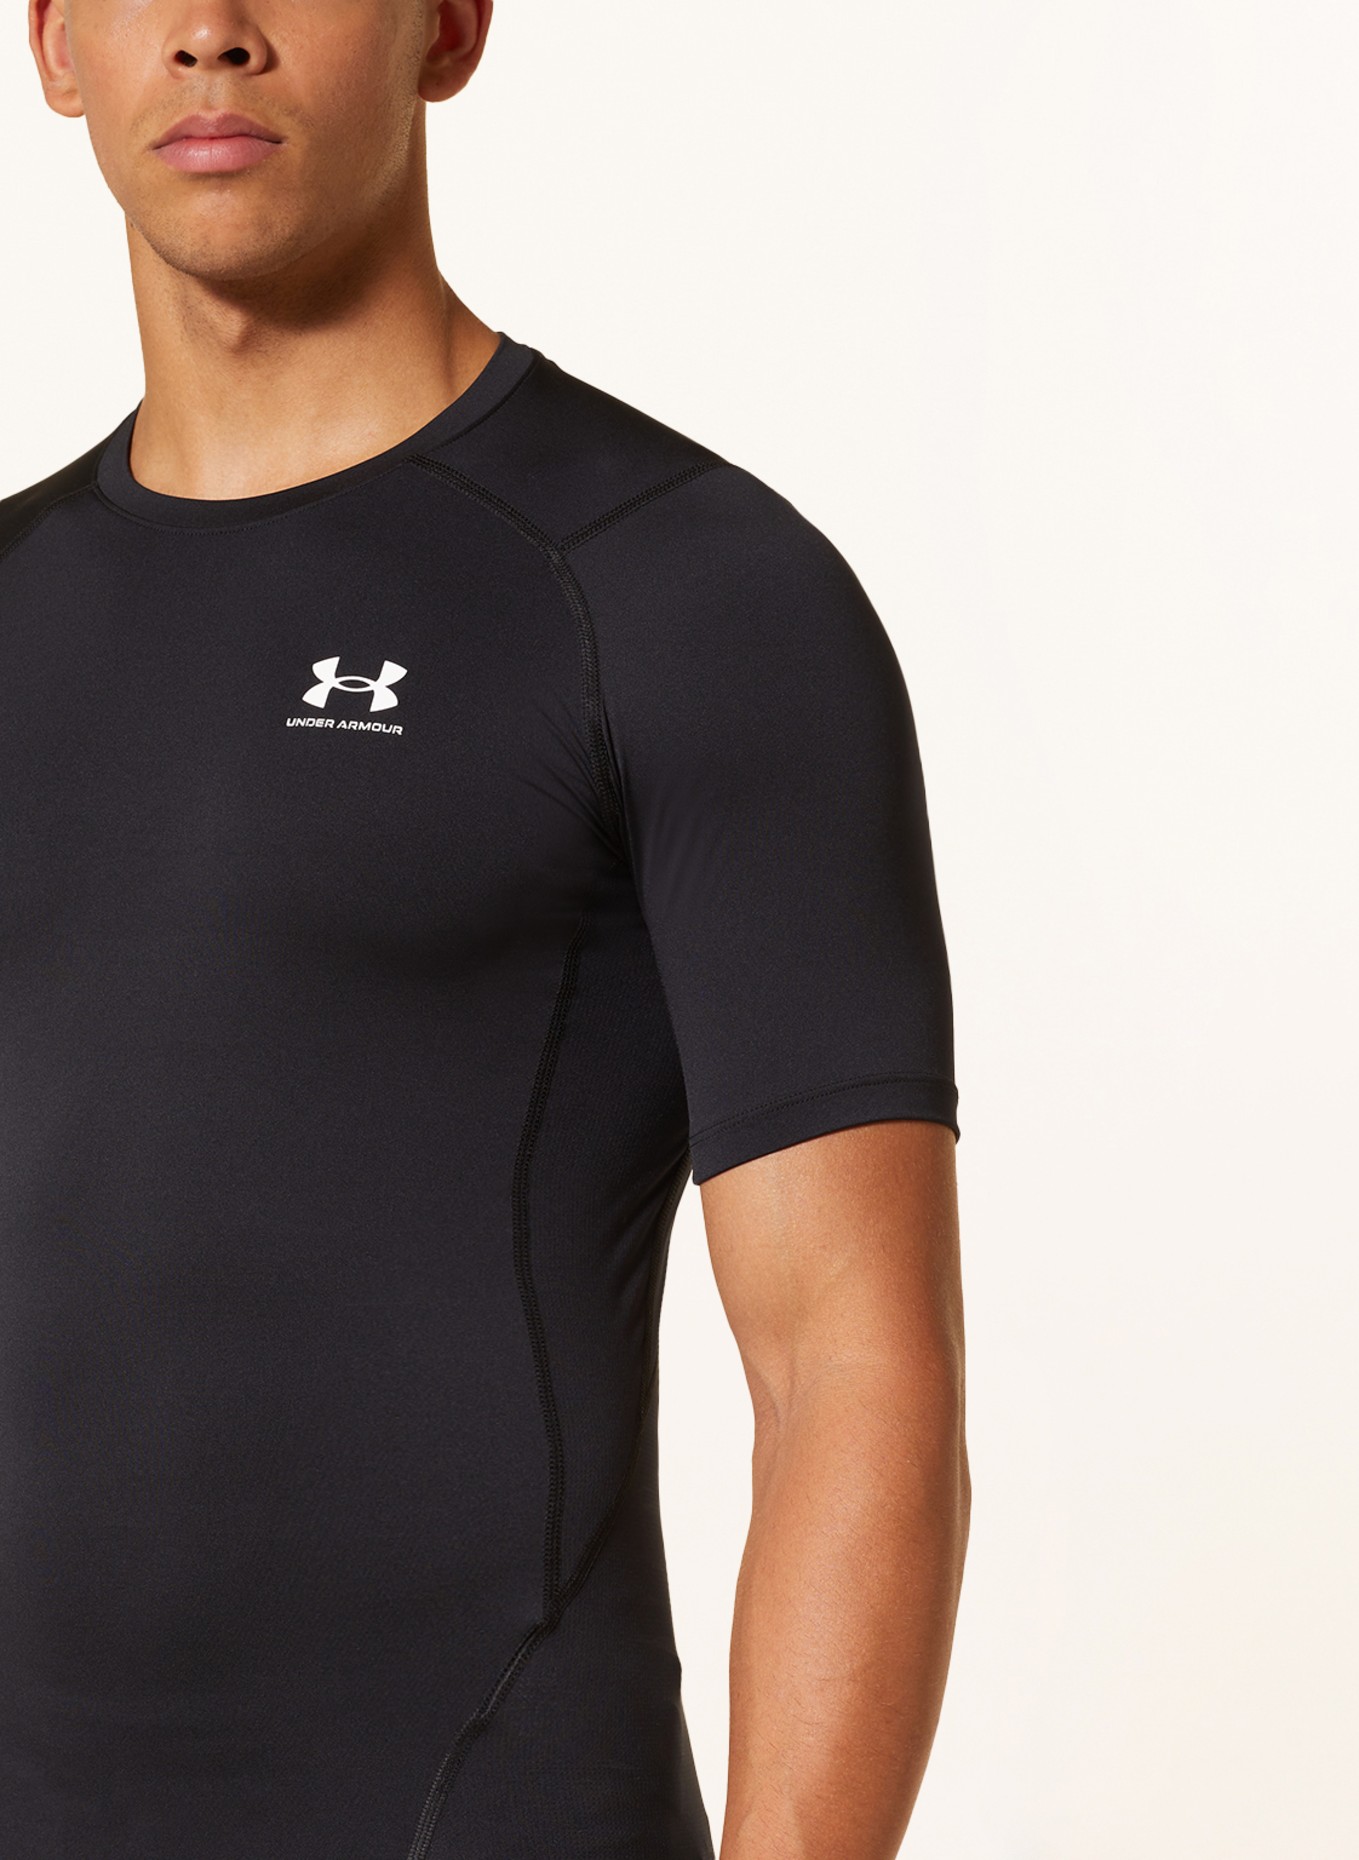 Under Armour Training Heat Gear Comp t-shirt in black